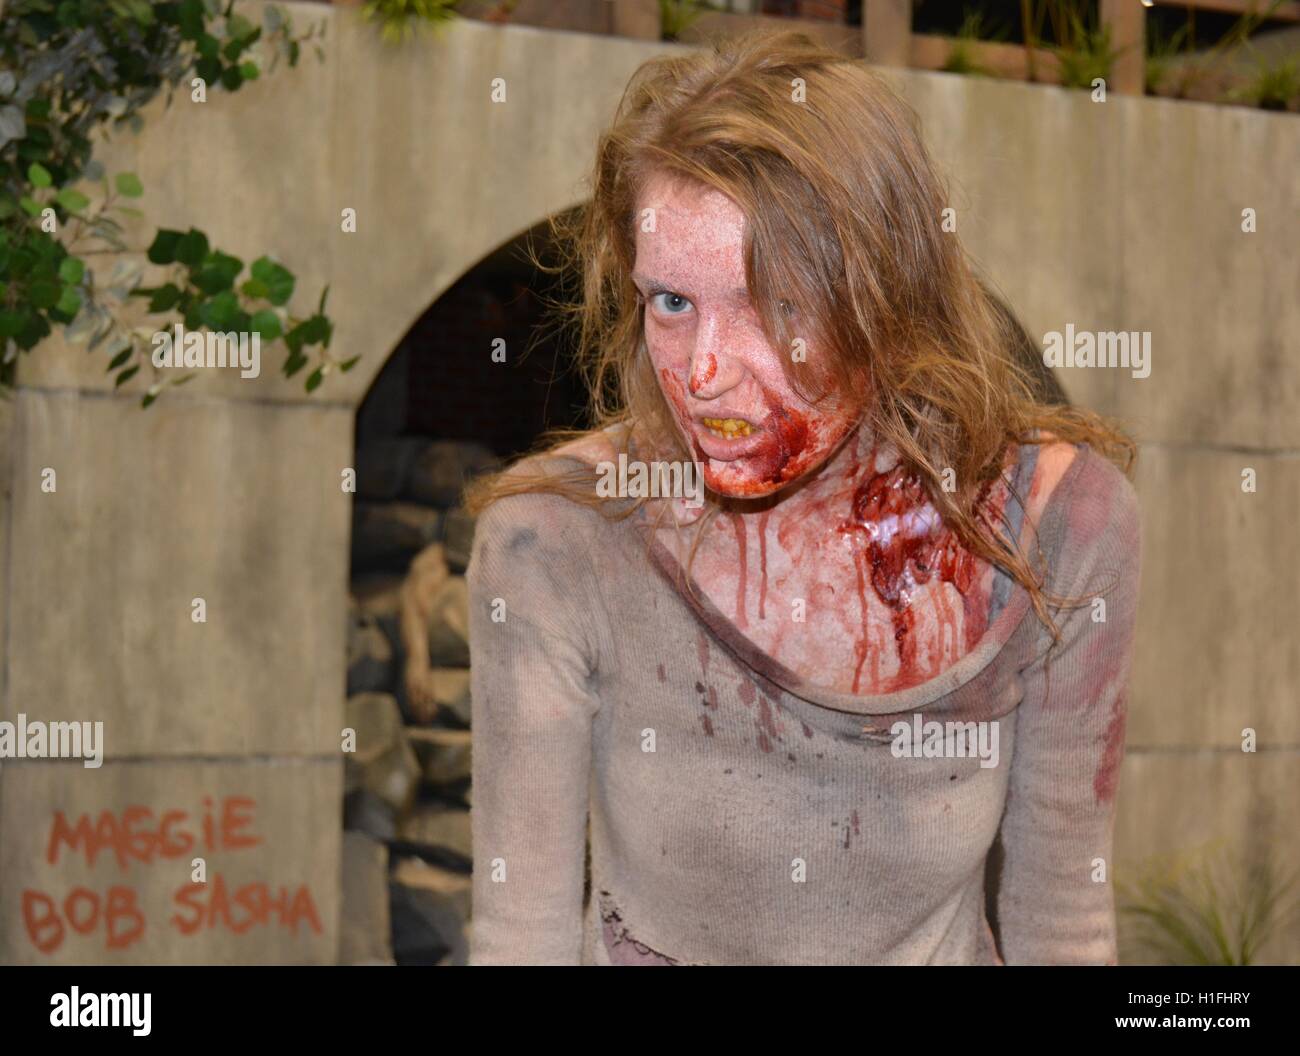 "Walking Dead", TV-Show, Comic-con, rothaarige Mädchen Zombie, Bloody, aus nächster Nähe, rotes Haar-Zombie-Mädchen Nahaufnahme. Stockfoto